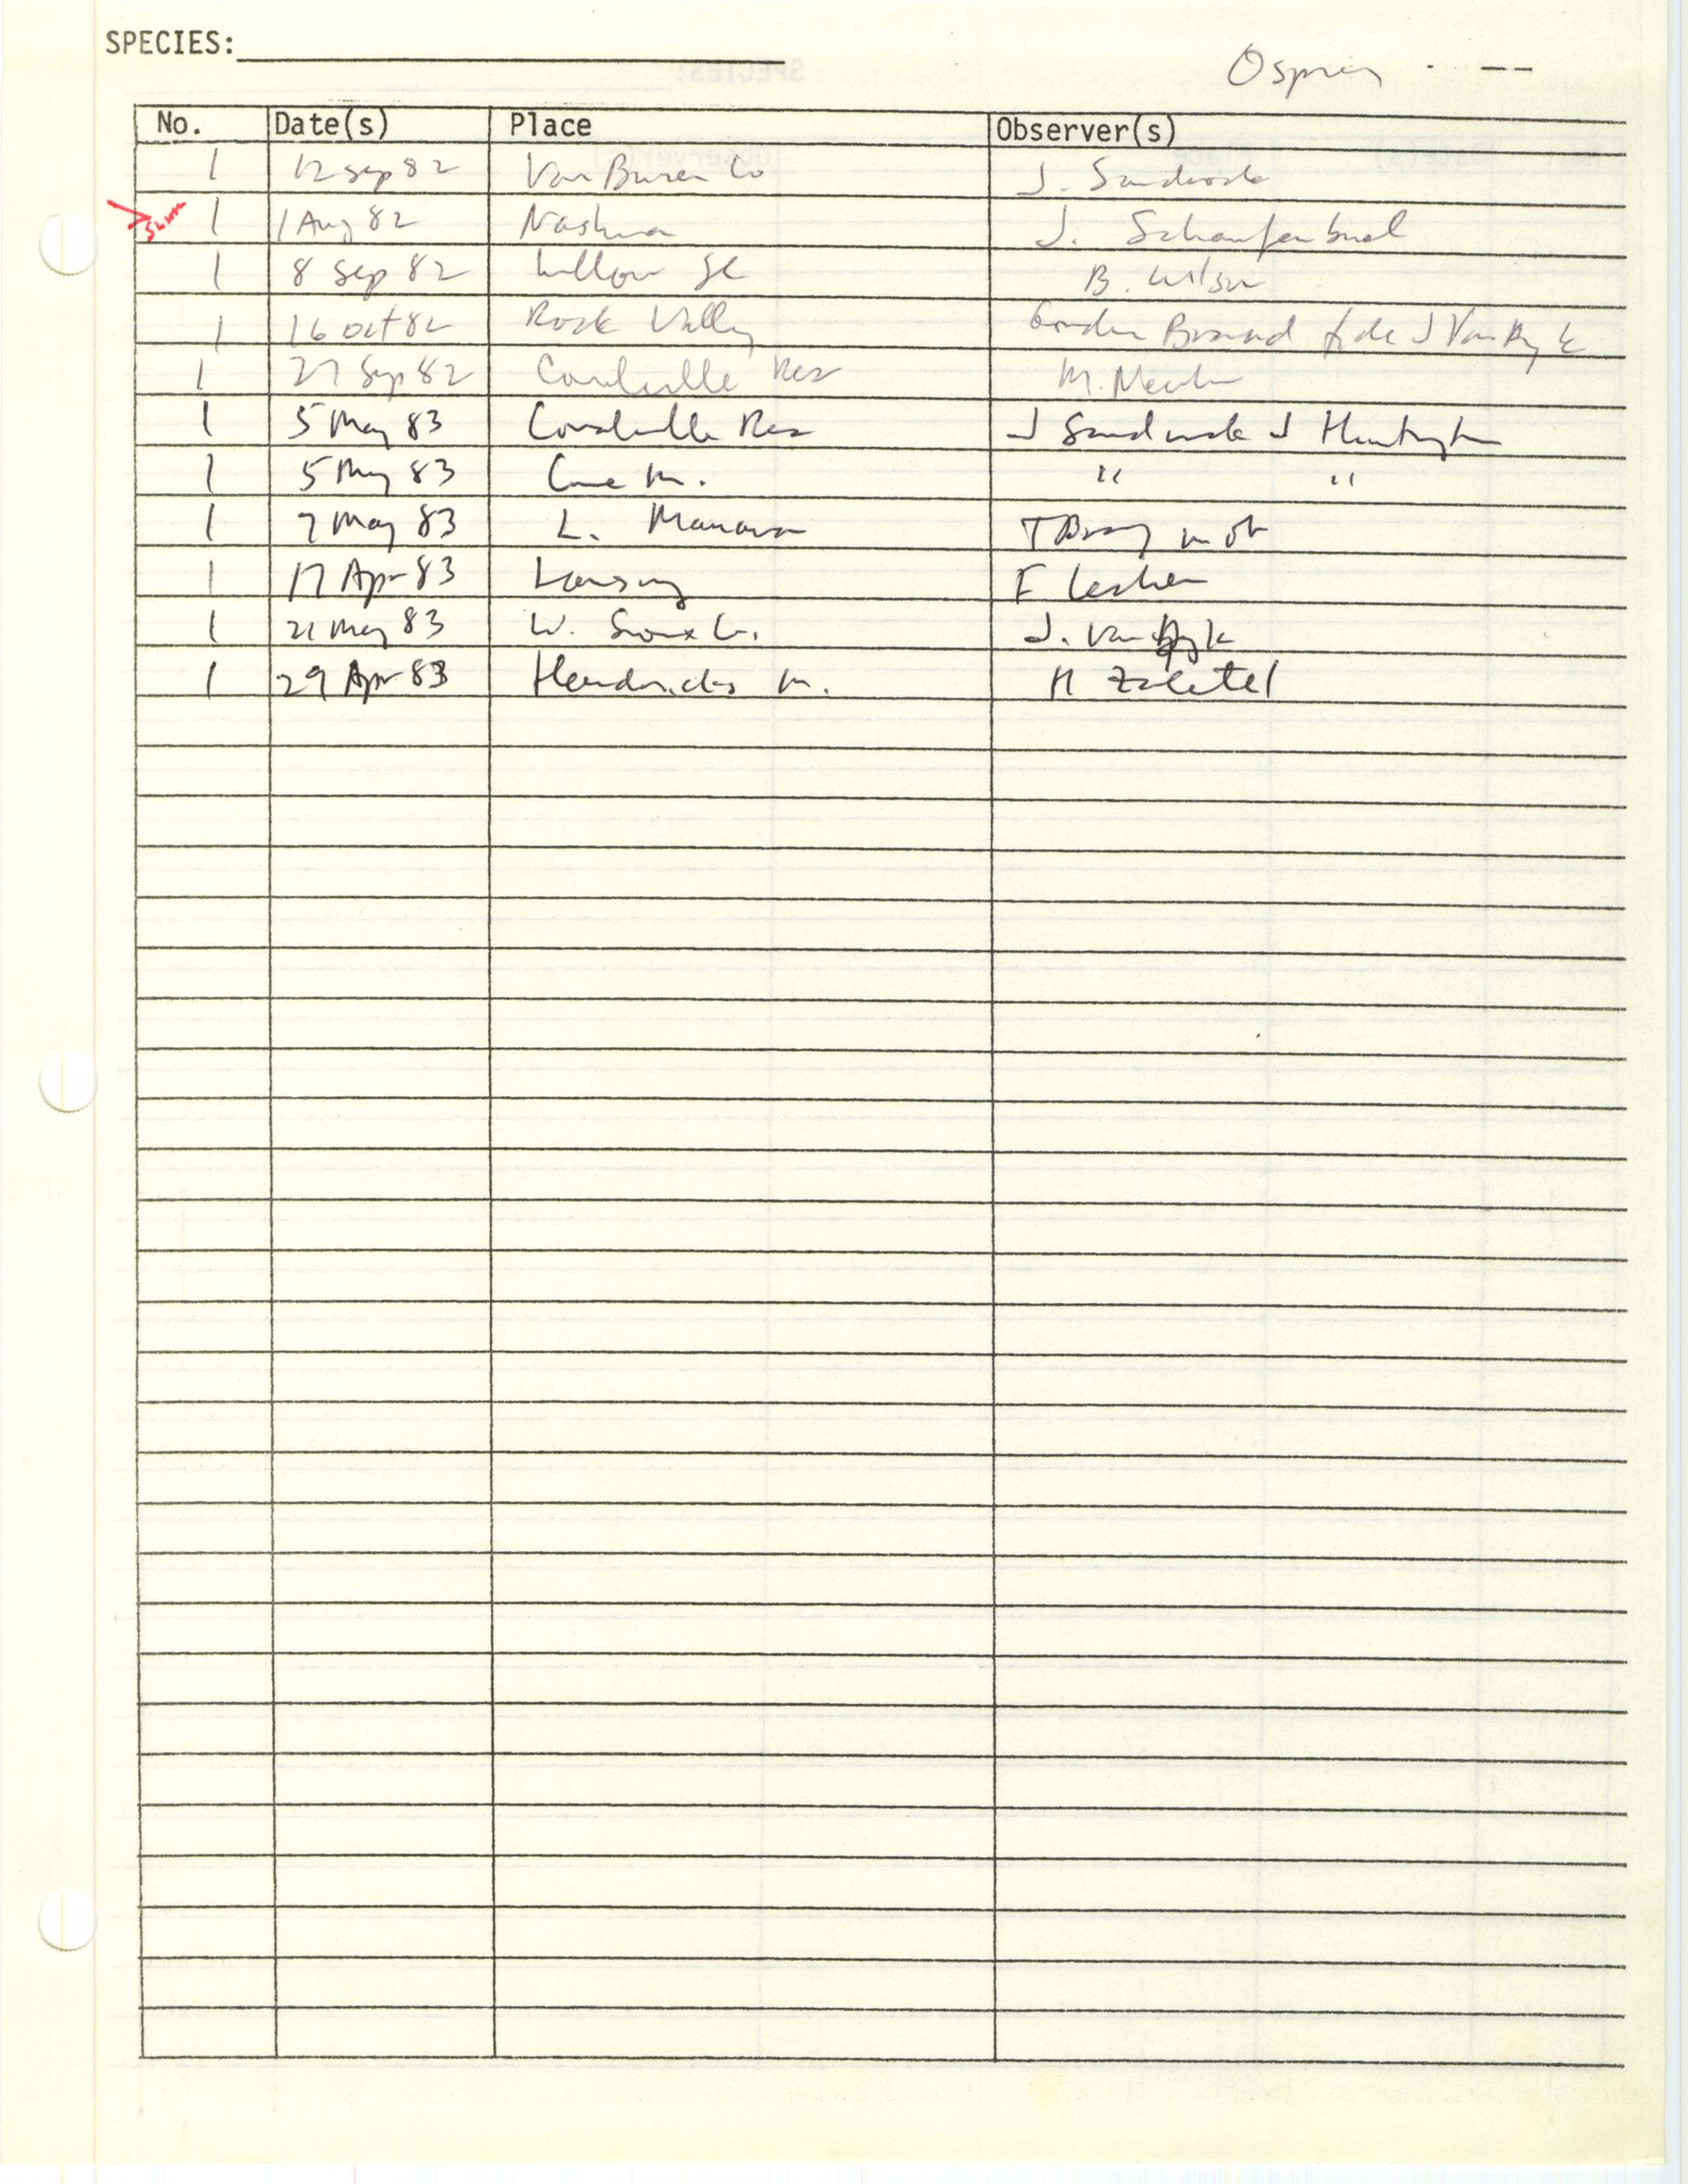 Iowa Ornithologists' Union, field report compiled data, Osprey, 1982-1983